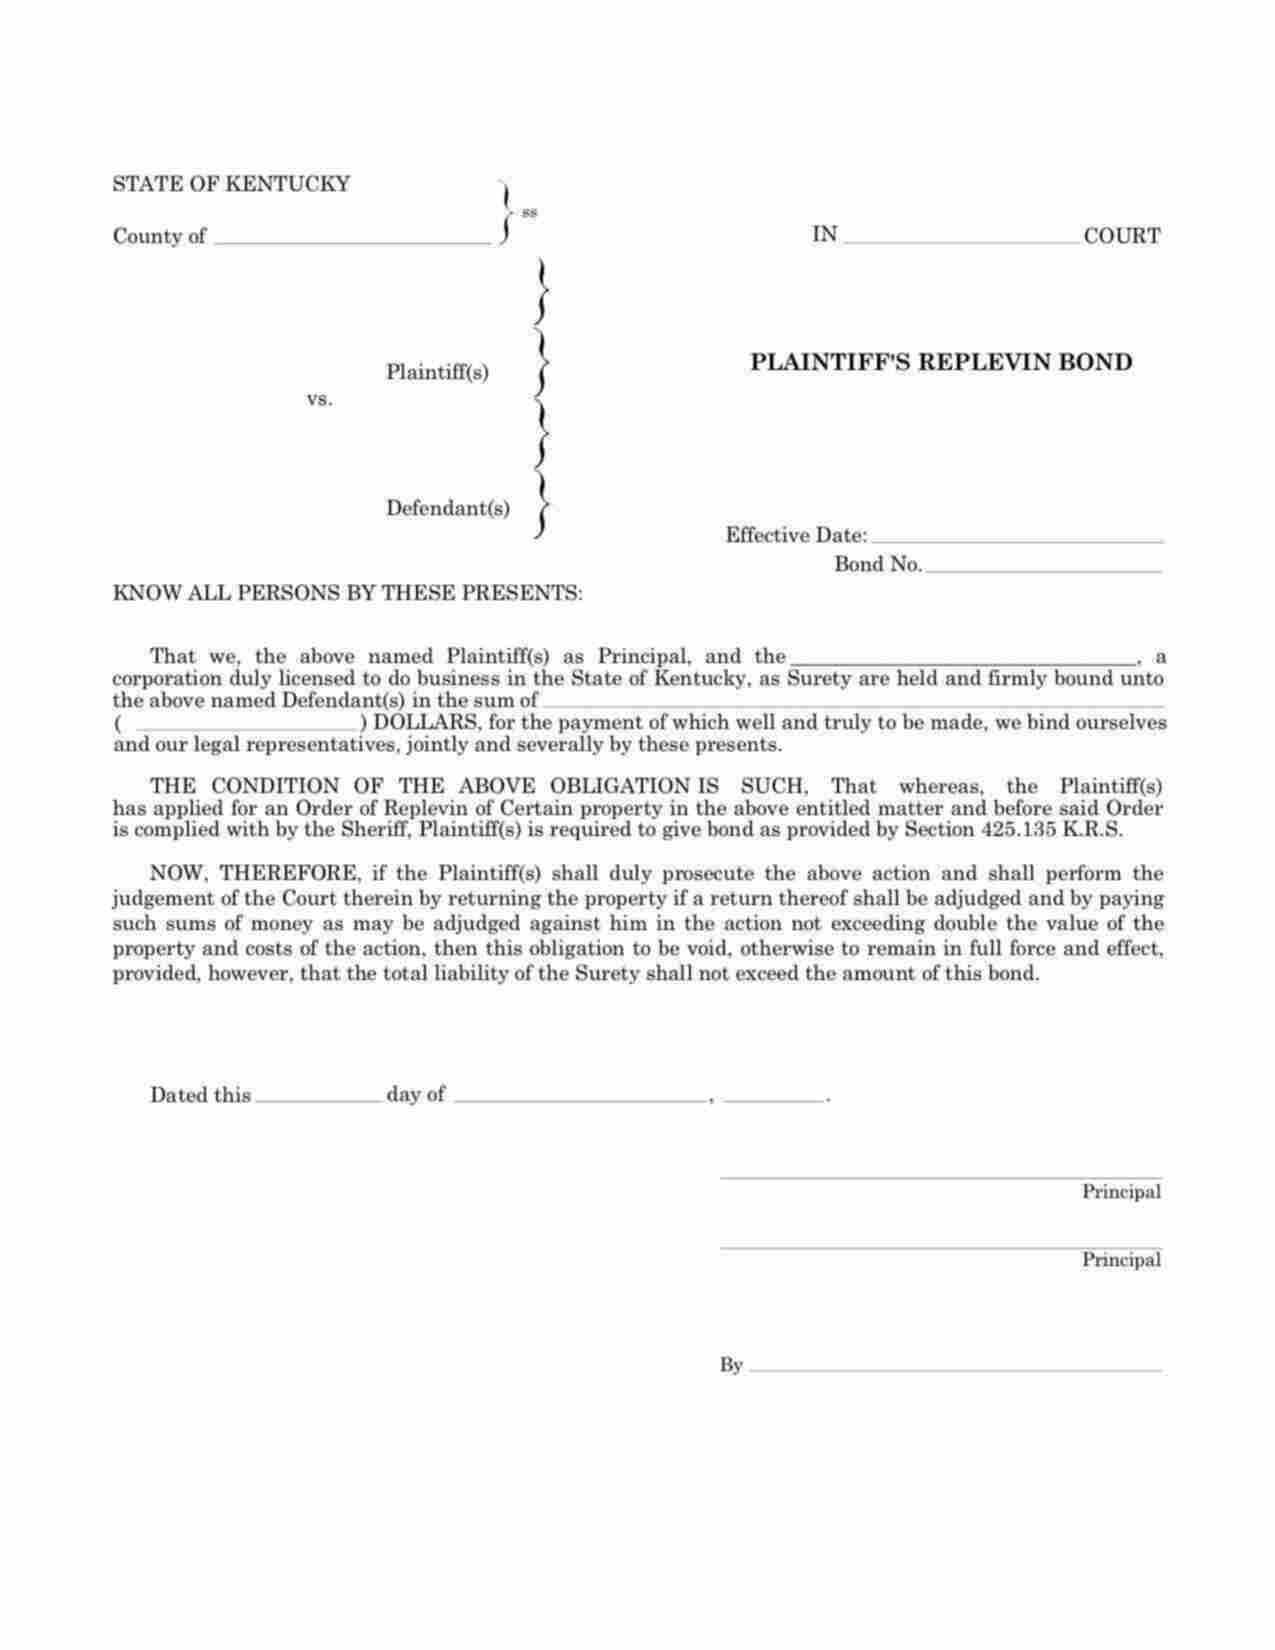 Kentucky Plaintiffs Replevin Bond Form